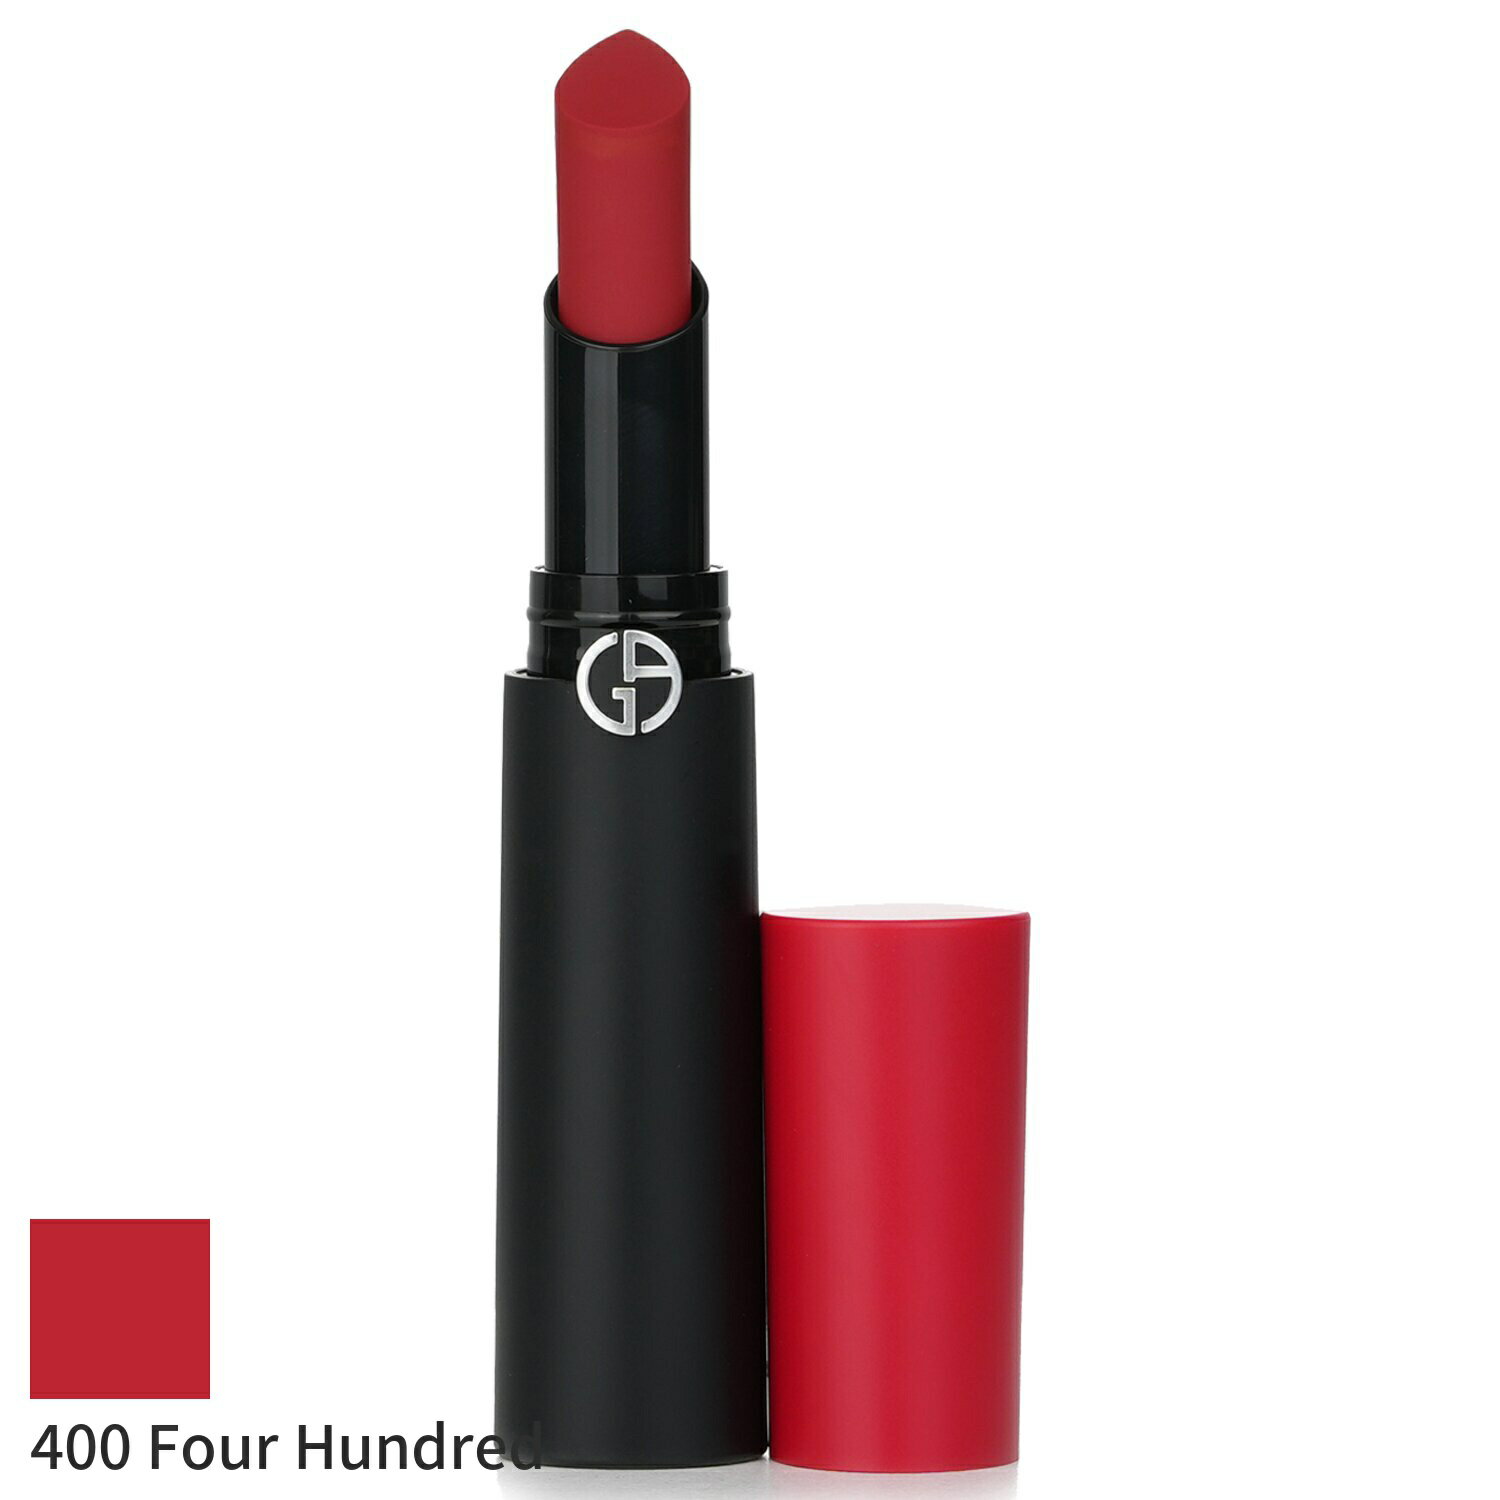 WWIA}[j bvJ[iOpj Giorgio Armani g Lip Power Matte Longwear & Caring Intense Lipstick - # 400 Four Hundred 3.1g CNAbv bv ɂ ̓ v[g Mtg 2023 lC uh RX